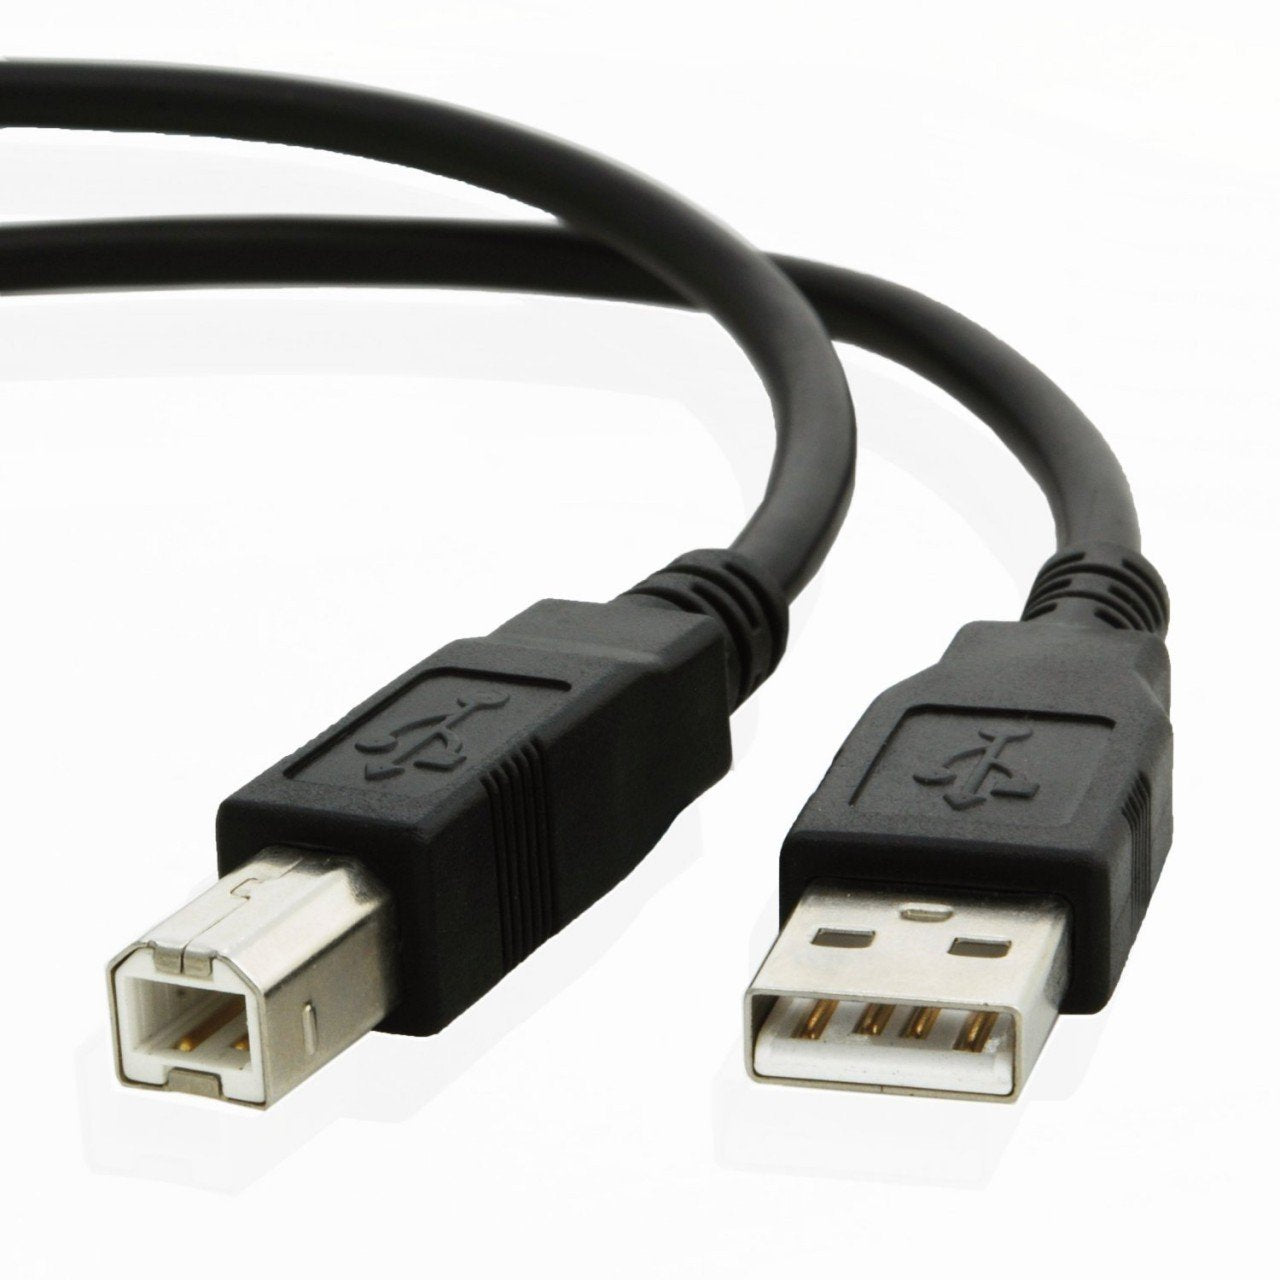 USB cable for Hp LASERJET PRO M203dw